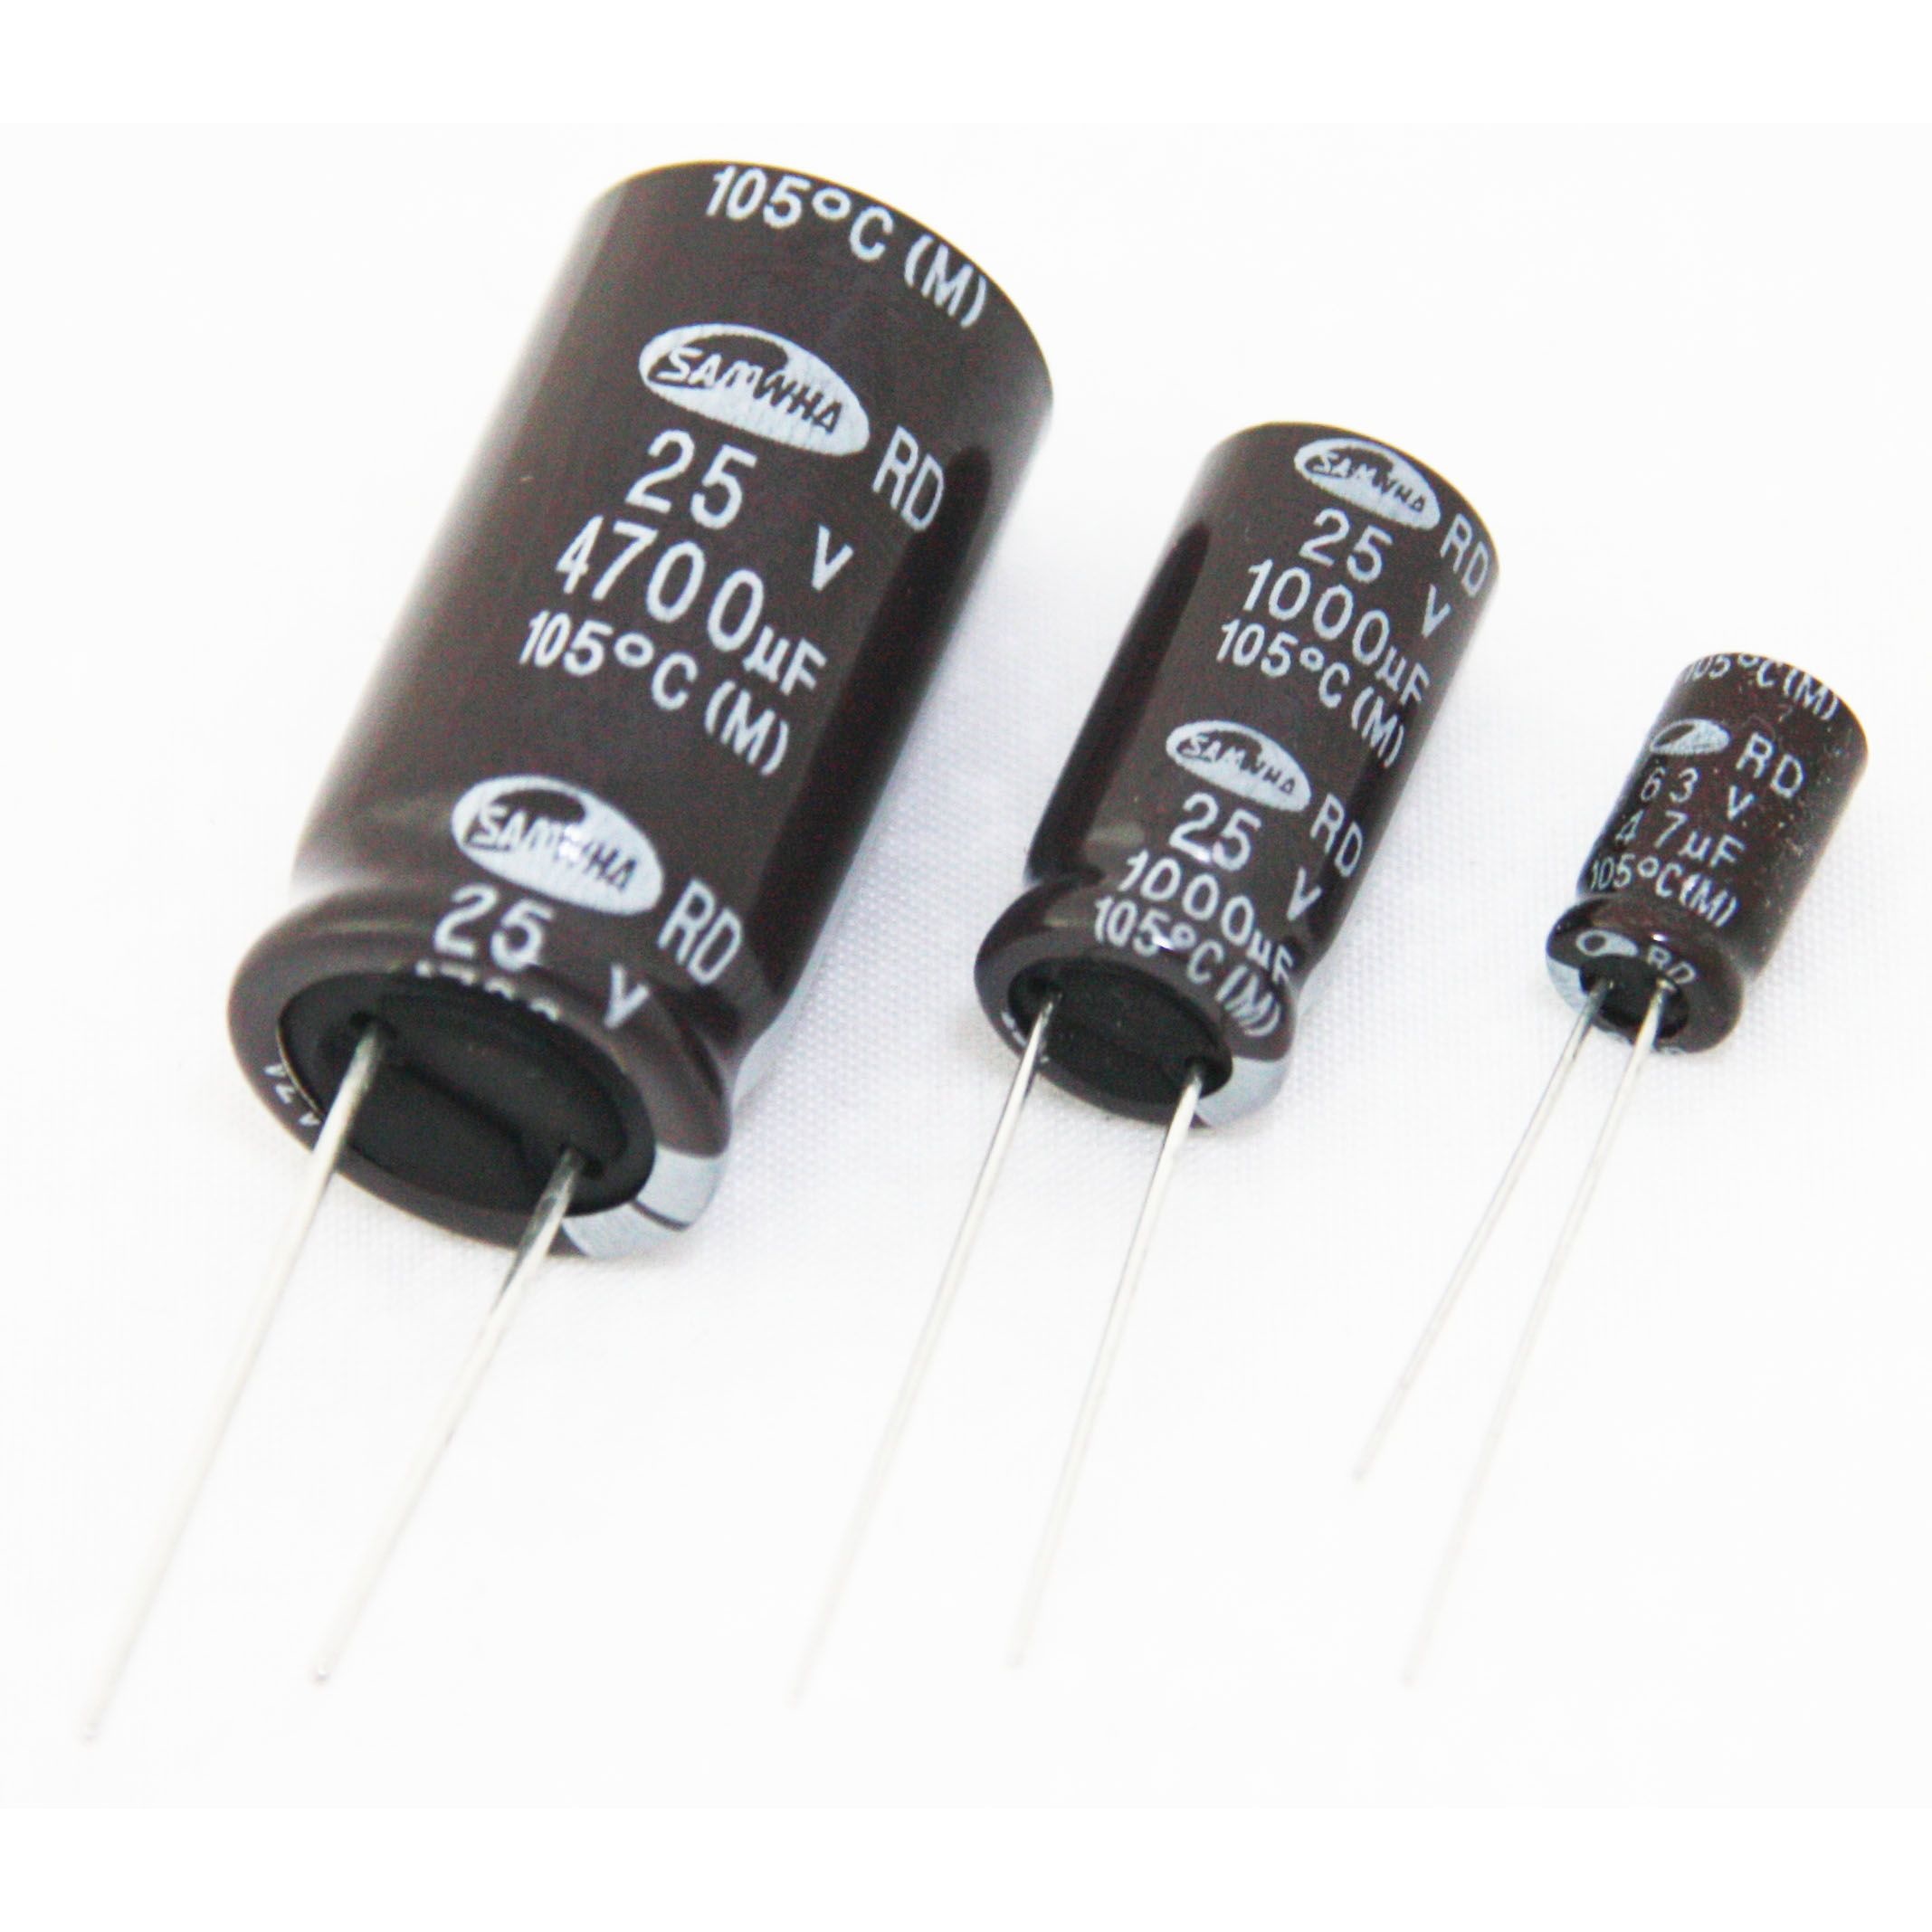 Electrolytic capacitor 105° 680uF-25V